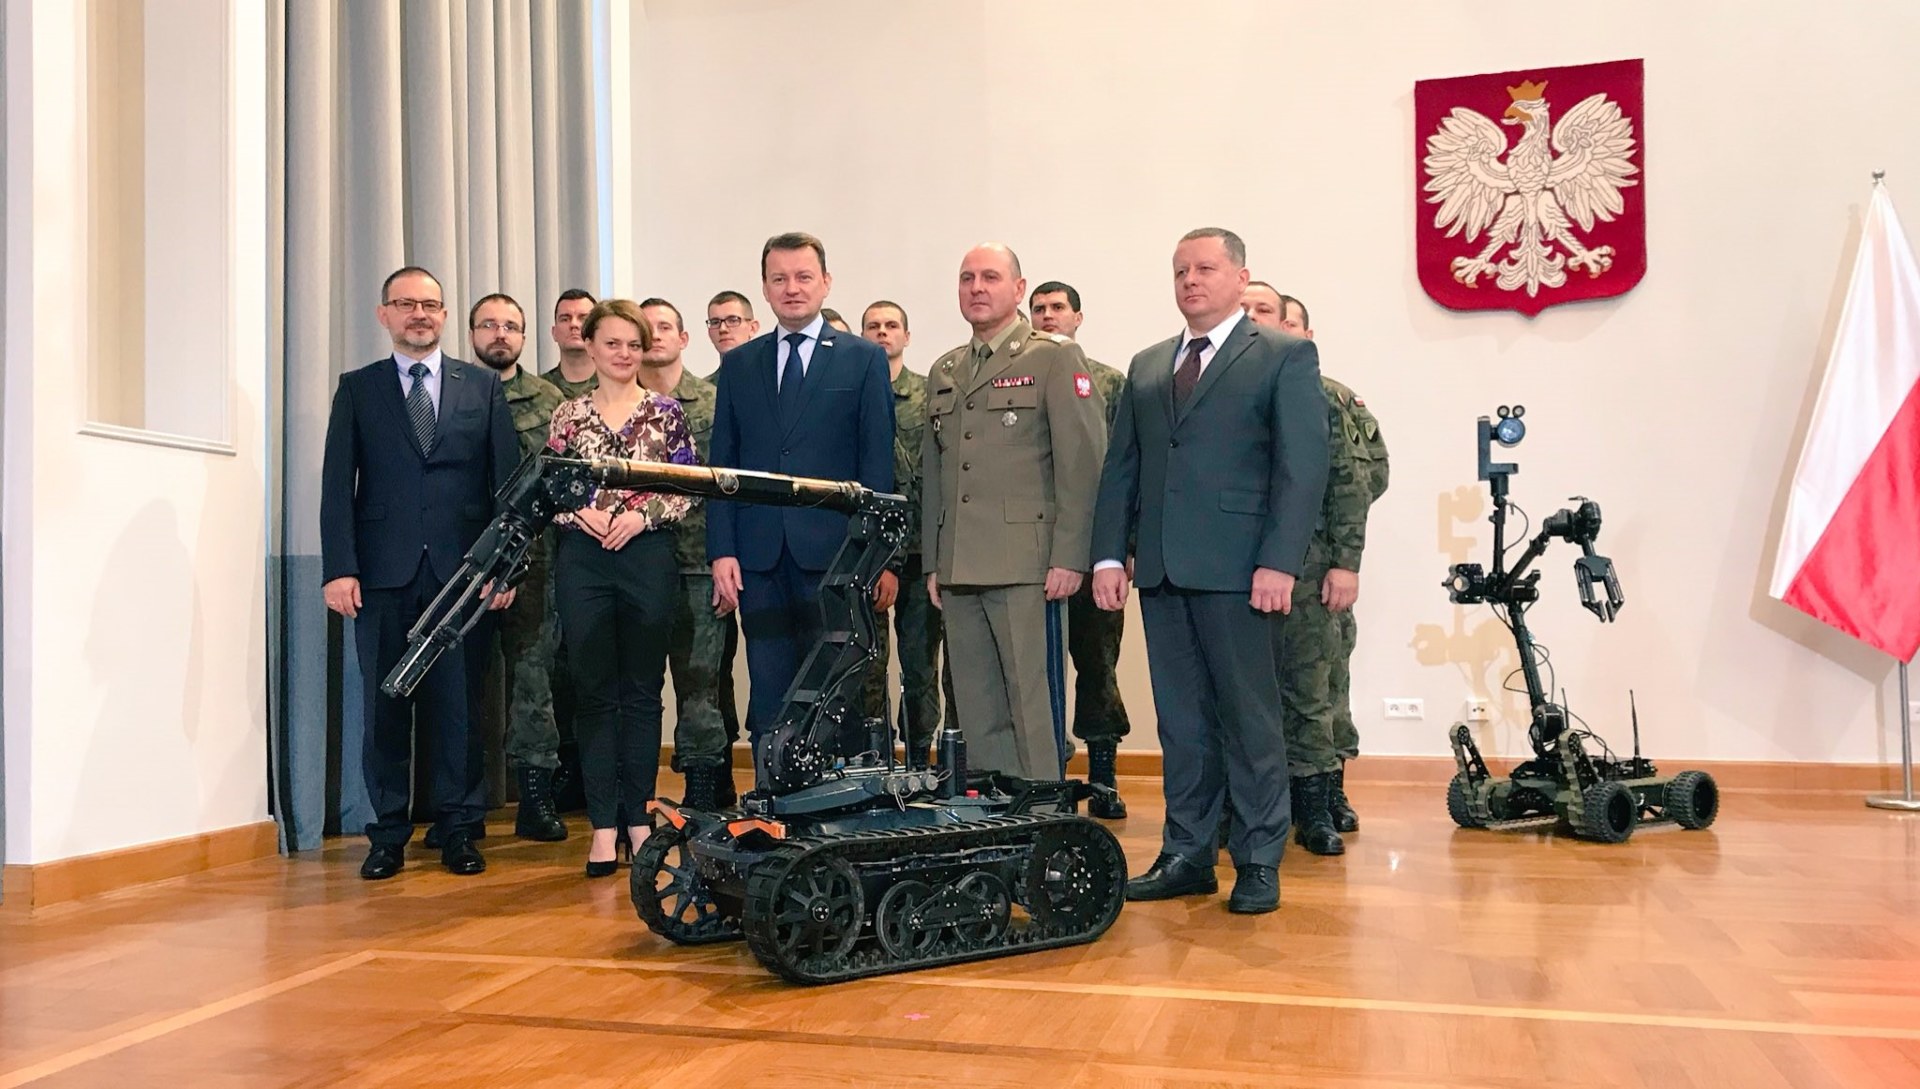 Åukasiewicz-PIAP Institute Robot Patrolowo PrzenoÅ›ny (RPP) 1806 engineer unmanned ground vehicle (UGV)